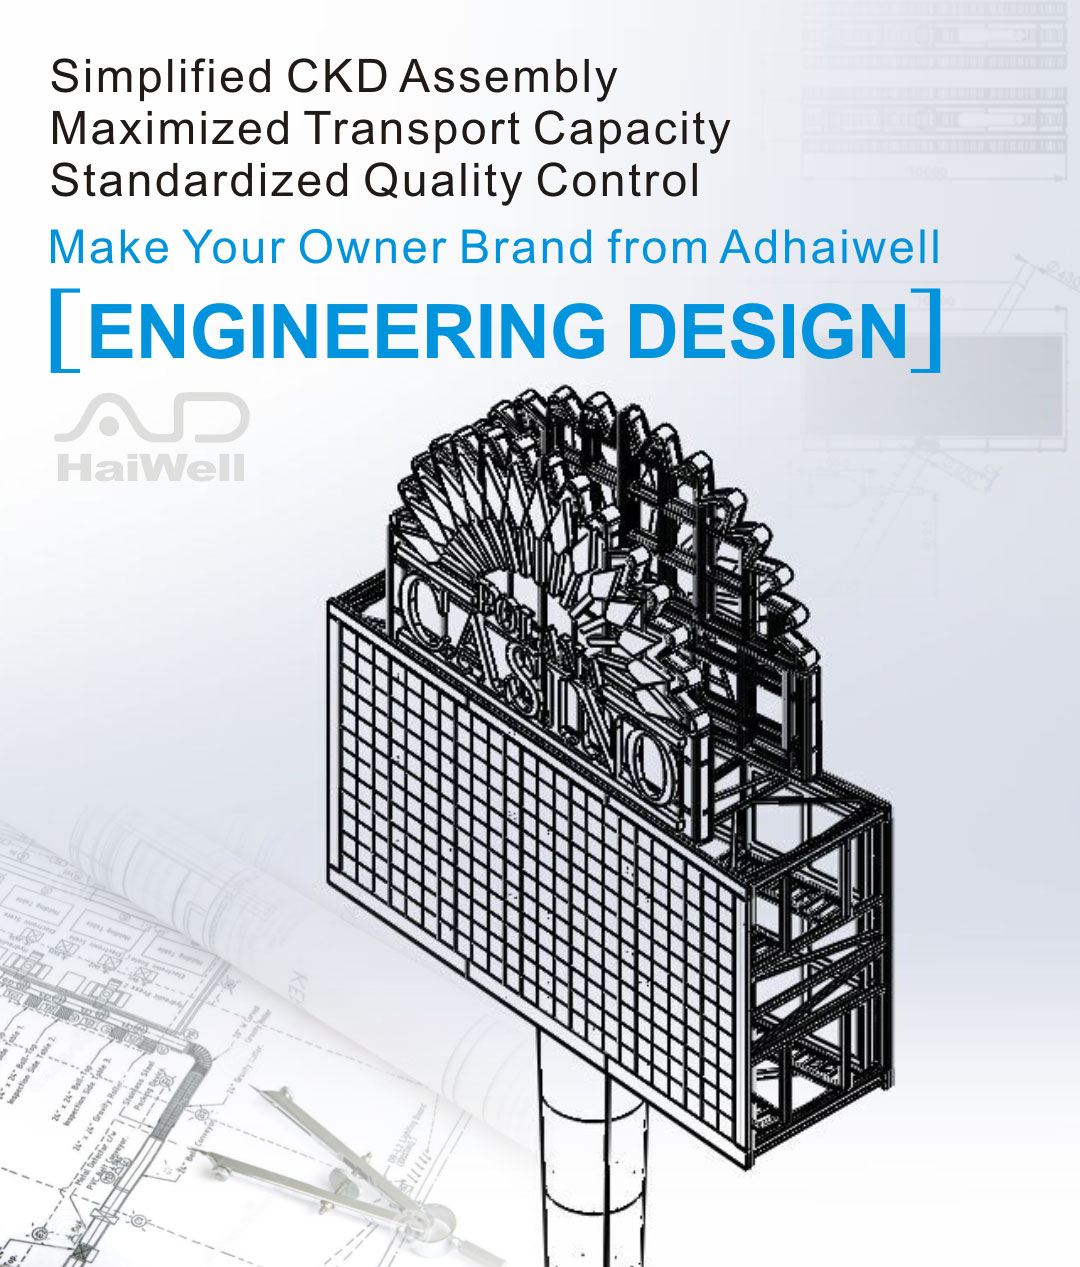 Adhaiwell advertising free Engineering Design